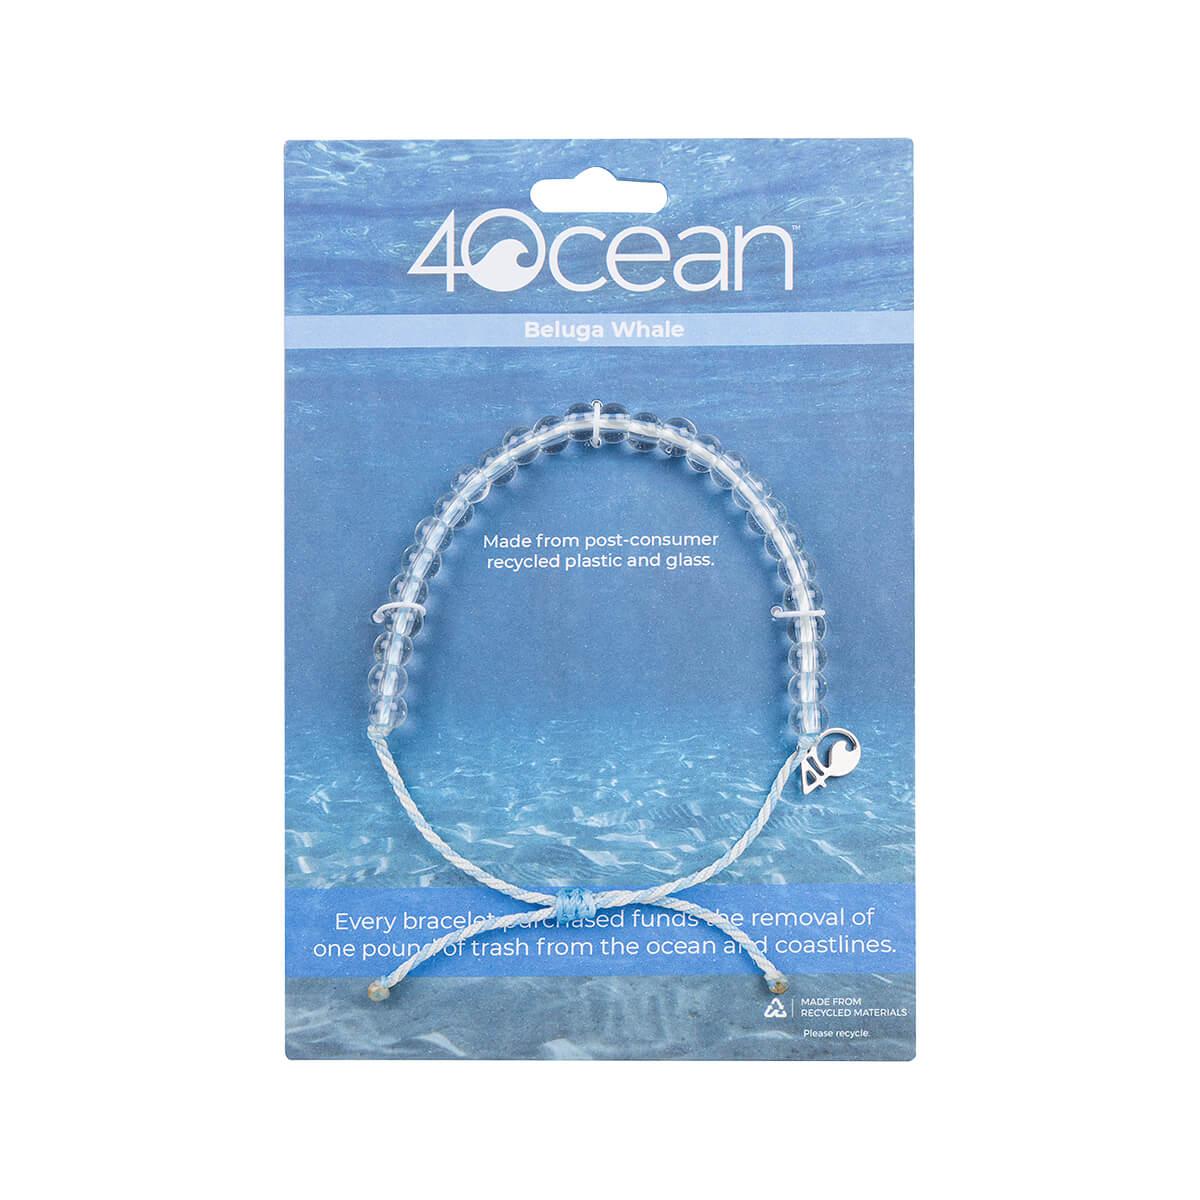 Mast General Store | Beluga Whale Ocean Bracelet